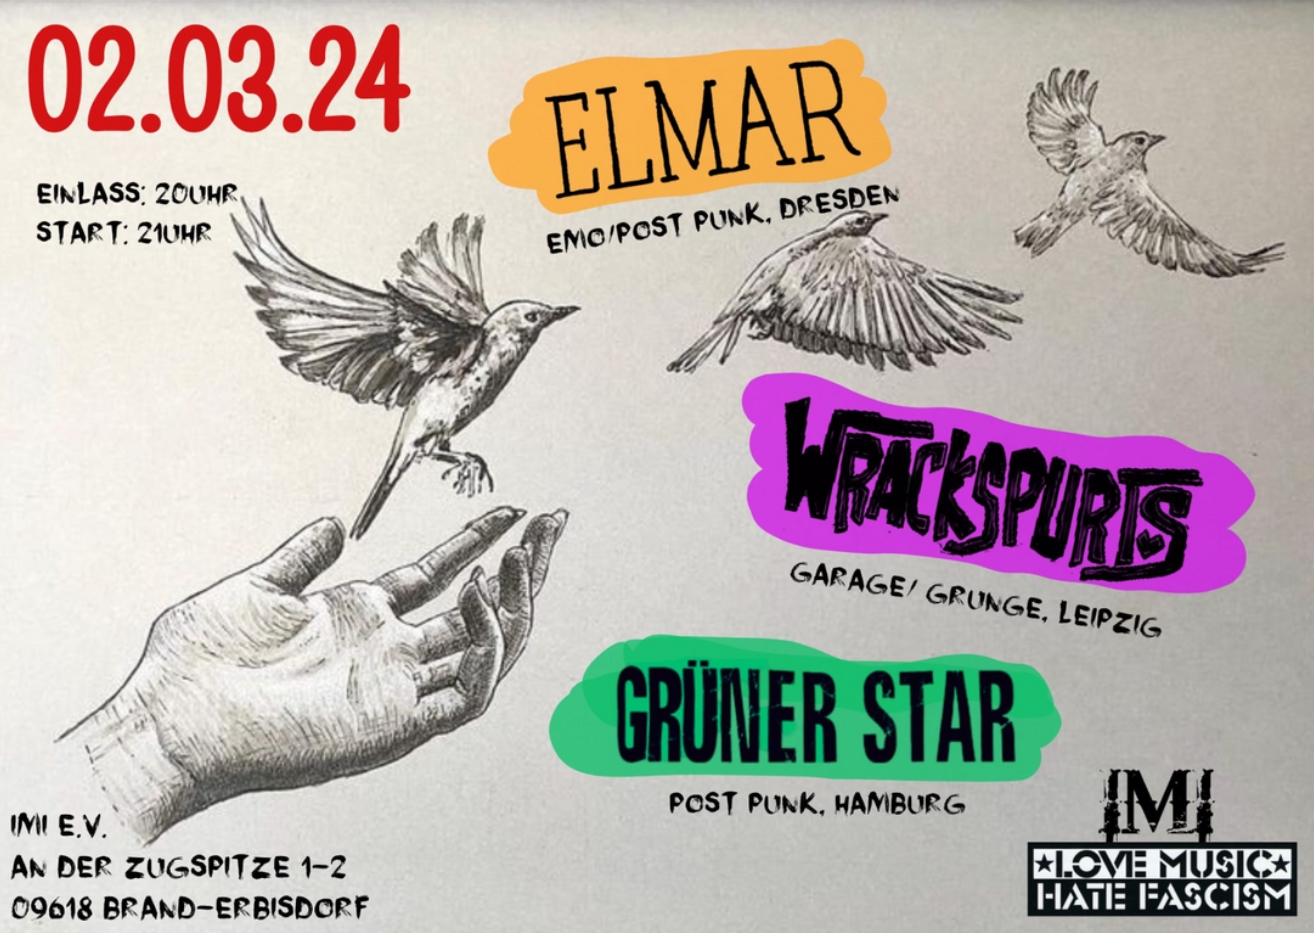 ImI e.V. 2.3.24 Elmar Grüner Star Wrackspurts